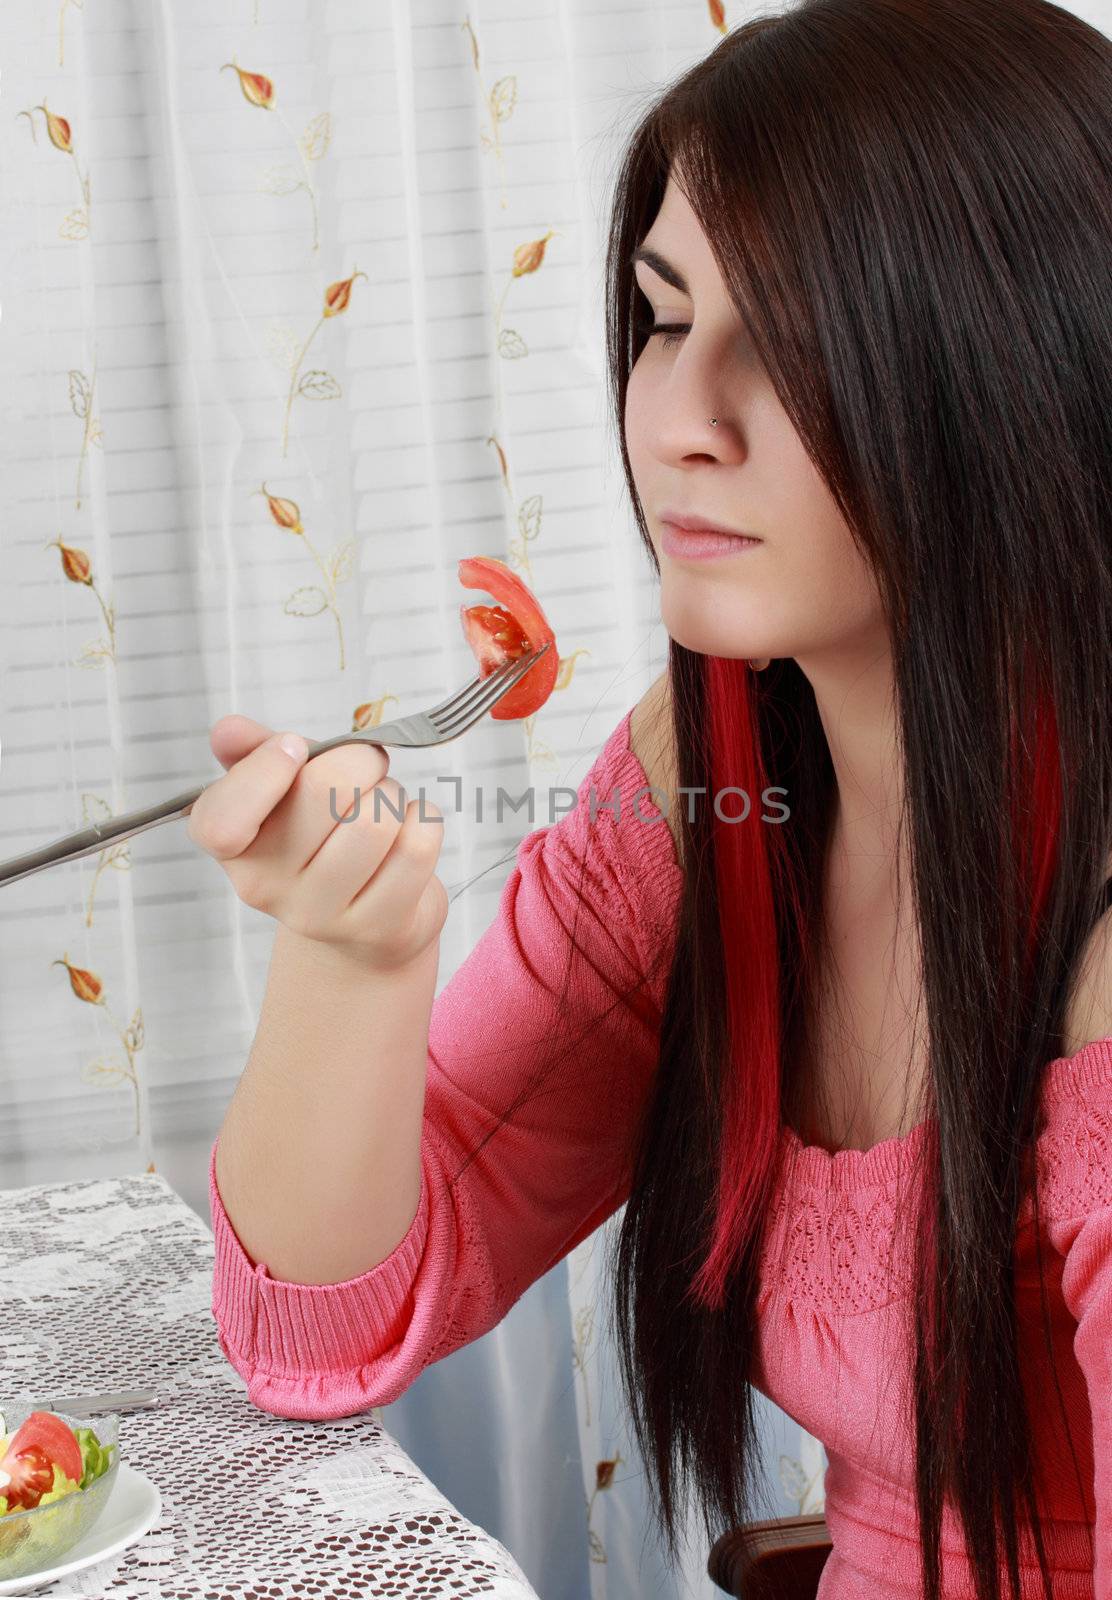 girl eating salad by lanalanglois